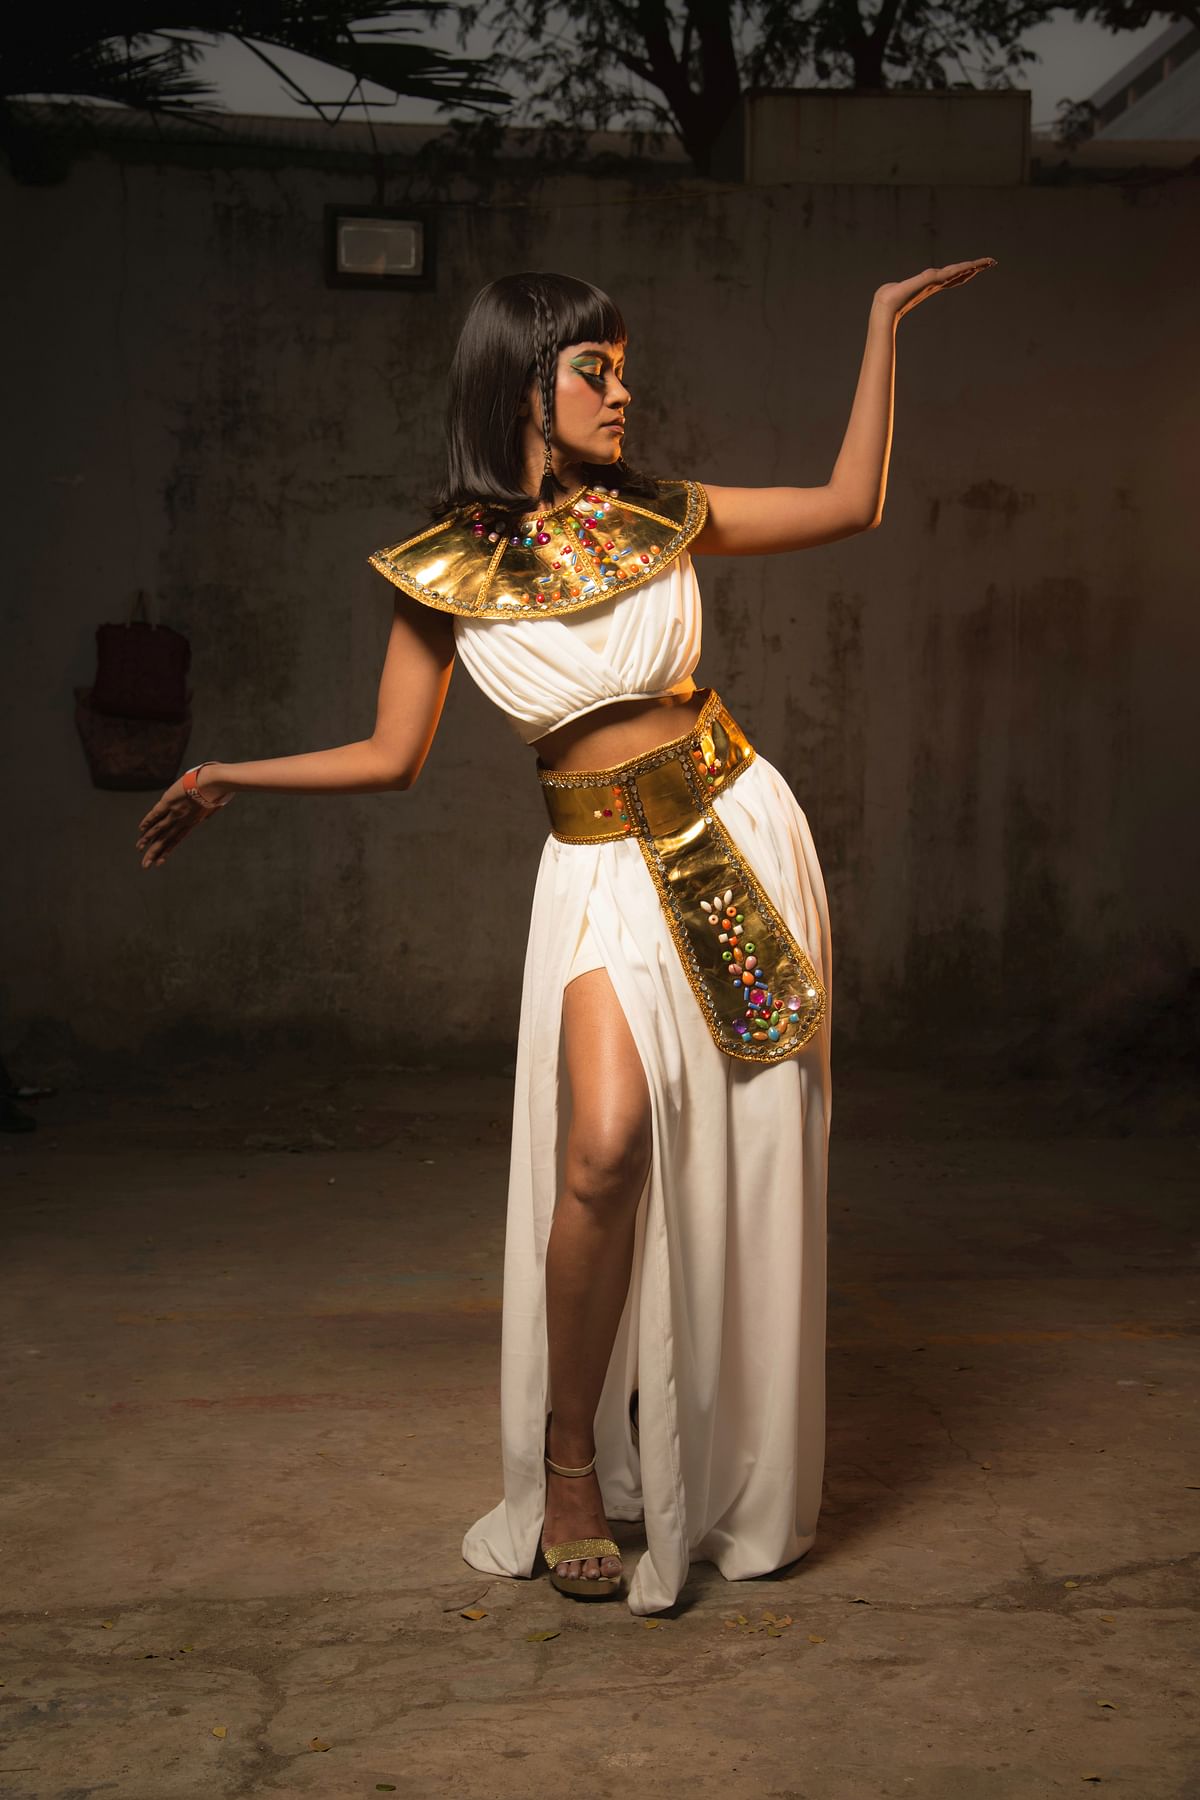 Medha as Cleopatra.